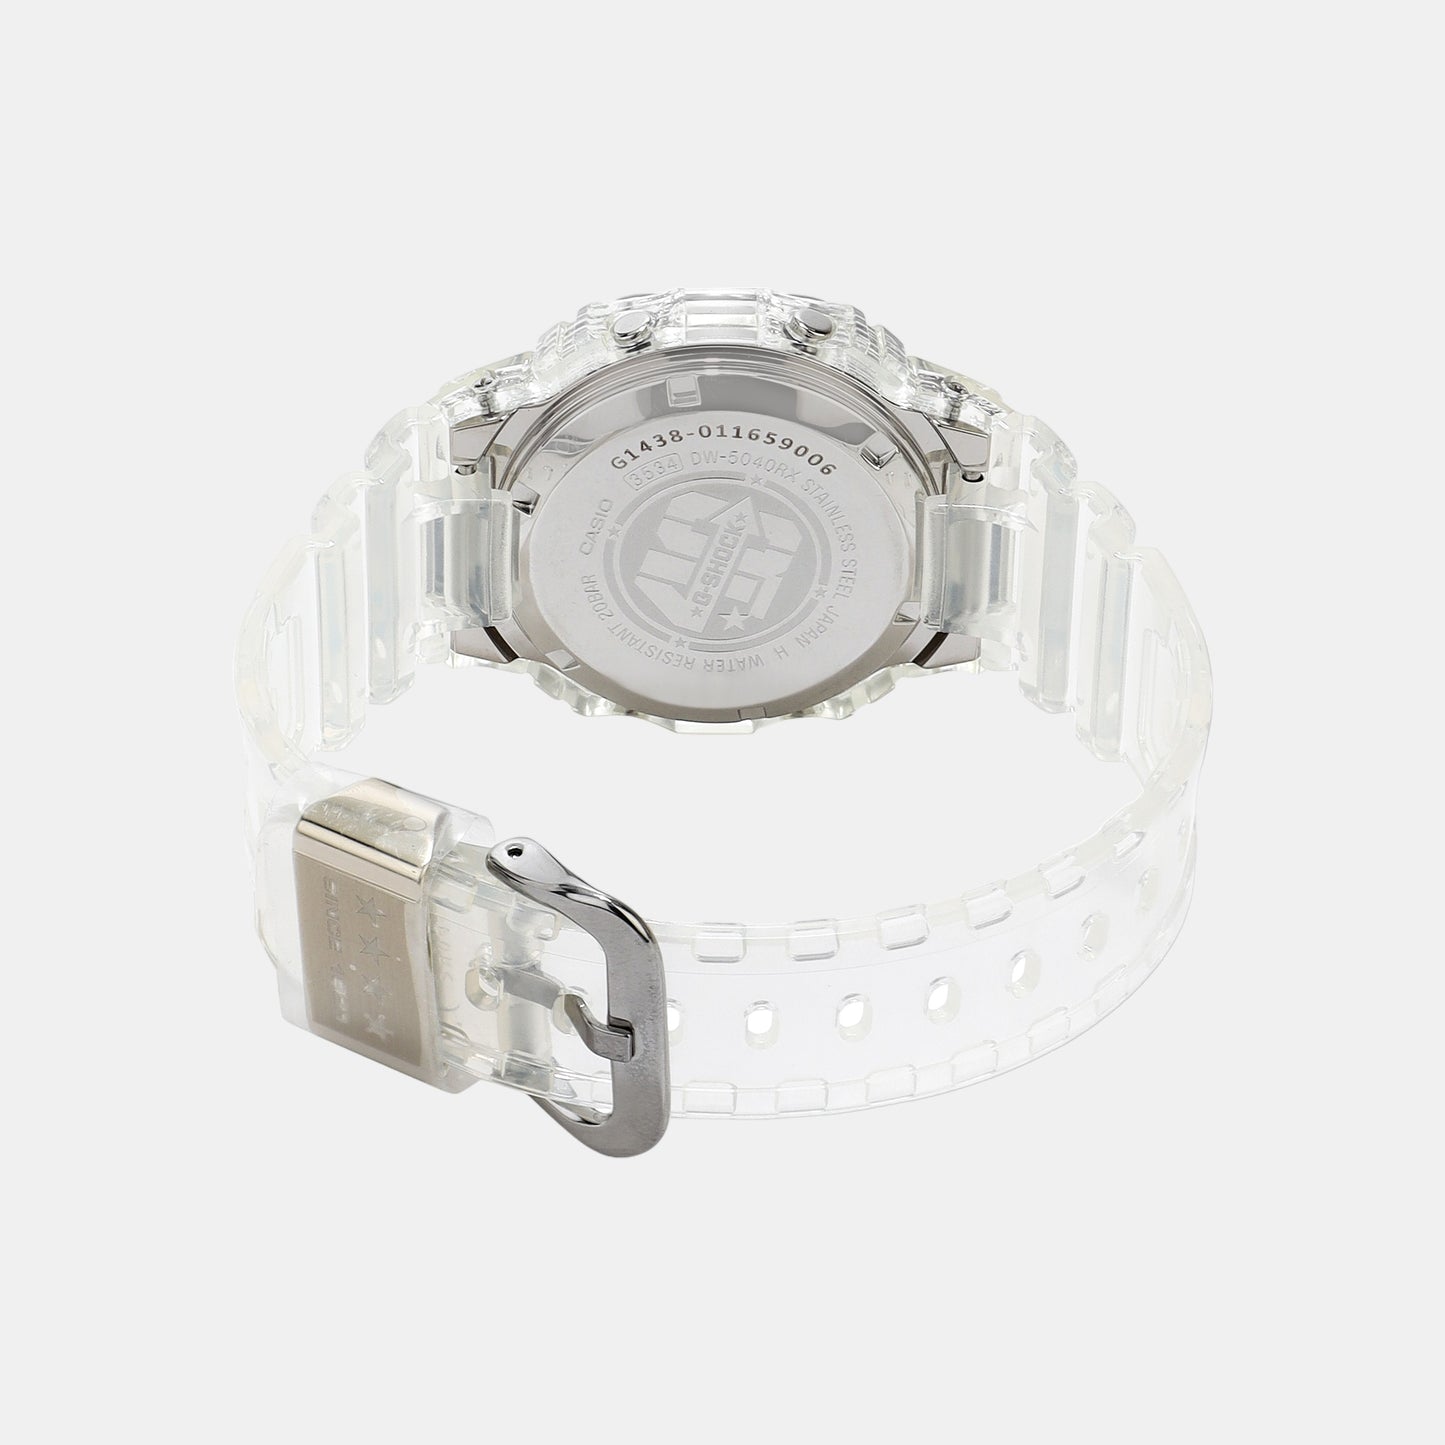 G-Shock Male Black Digital Resin Watch G1438